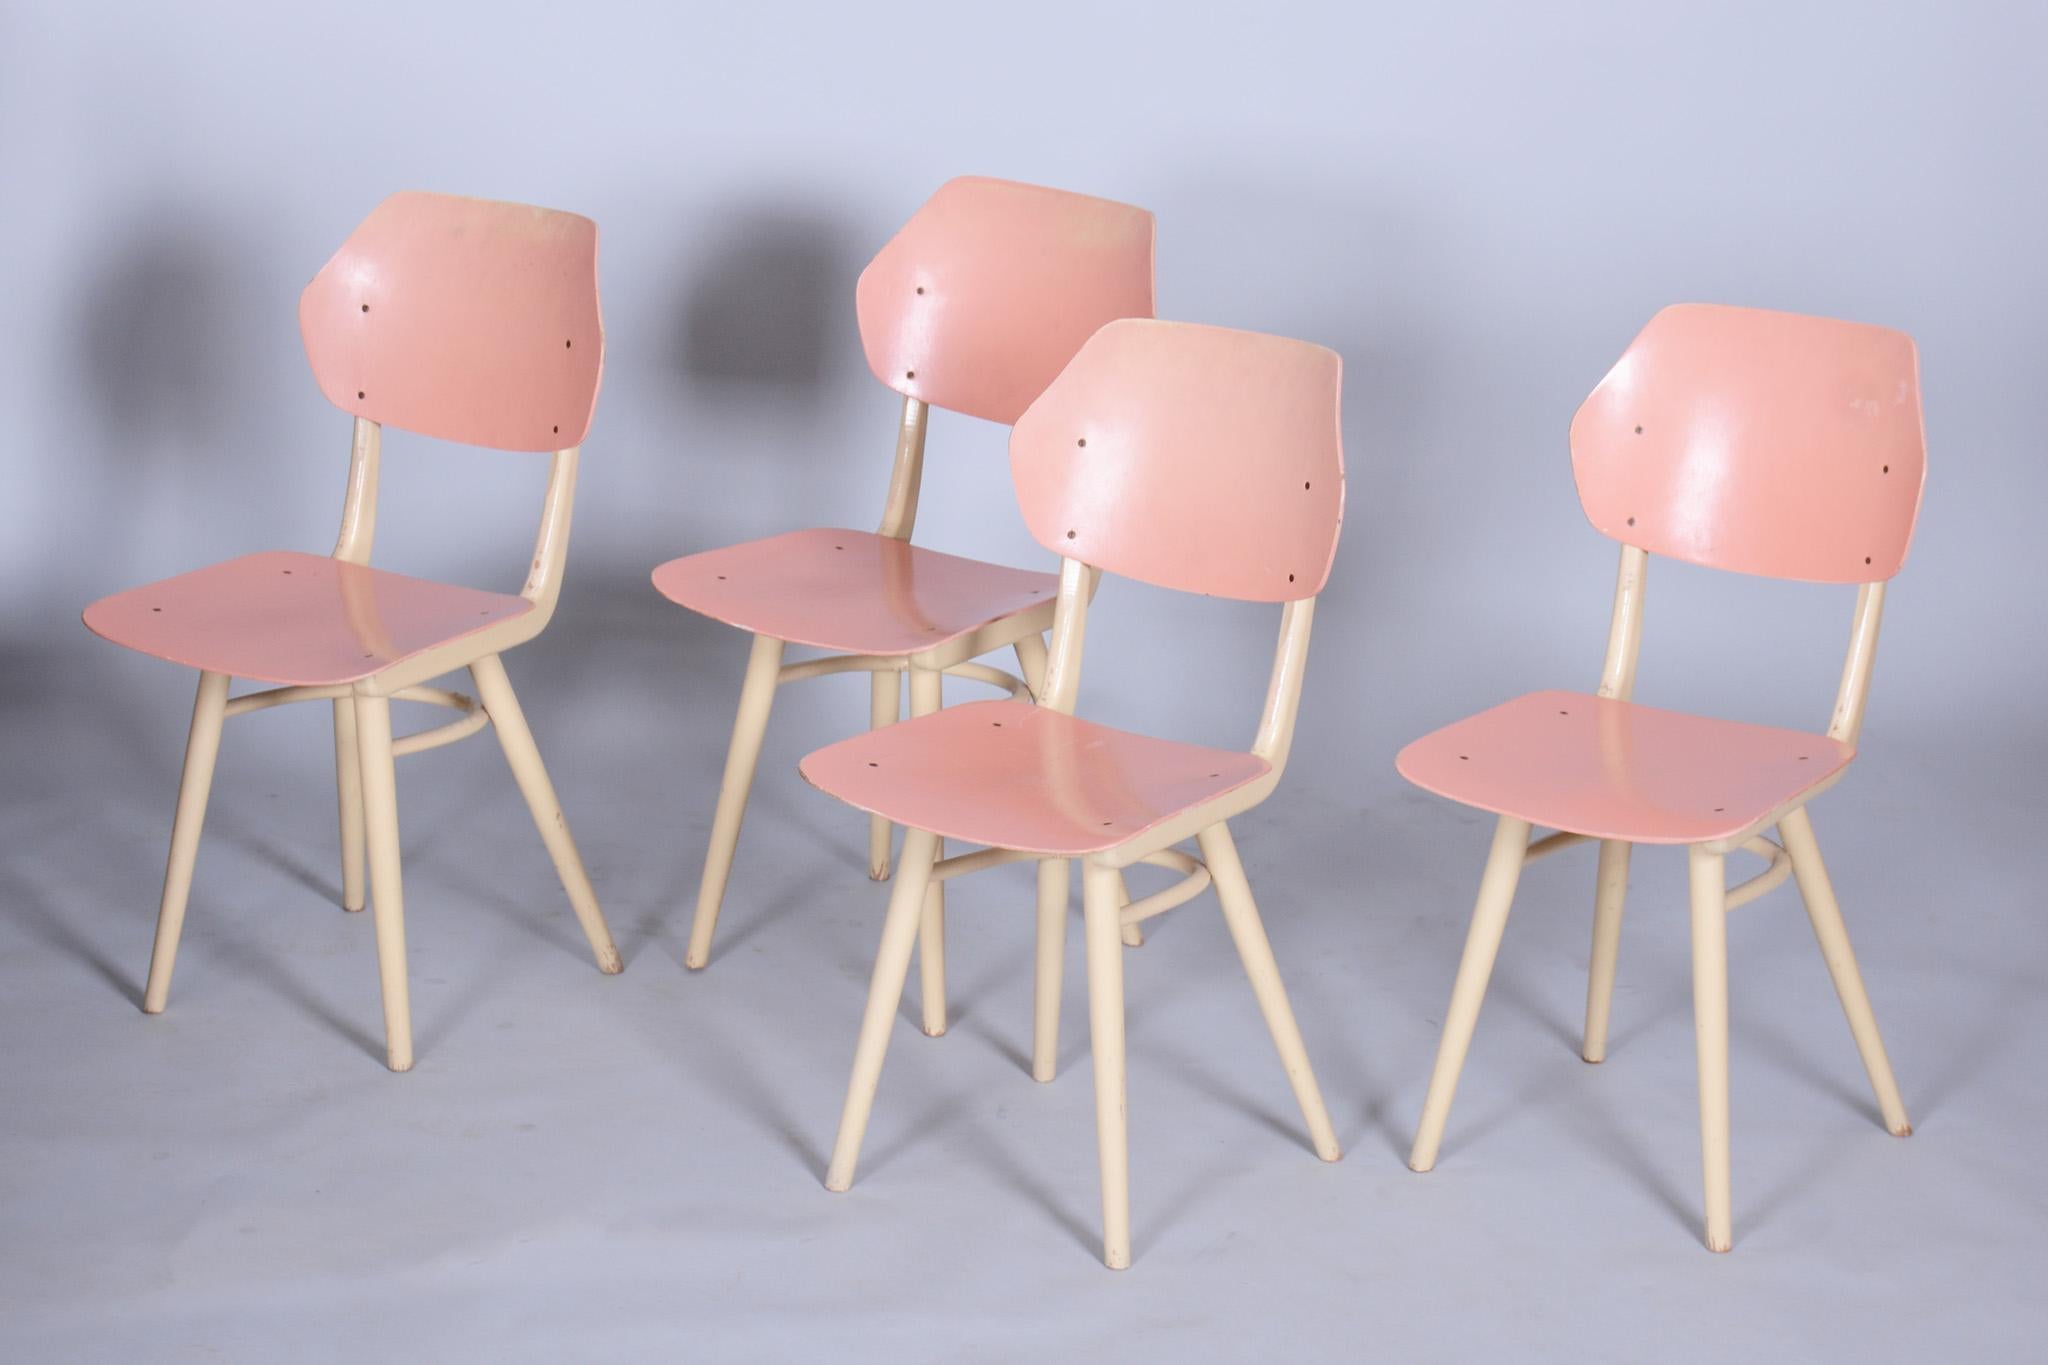 20th Century Set of Four Original Midcentury Chairs, Jitona Sobeslav, Beech, Czechia, 1950s For Sale